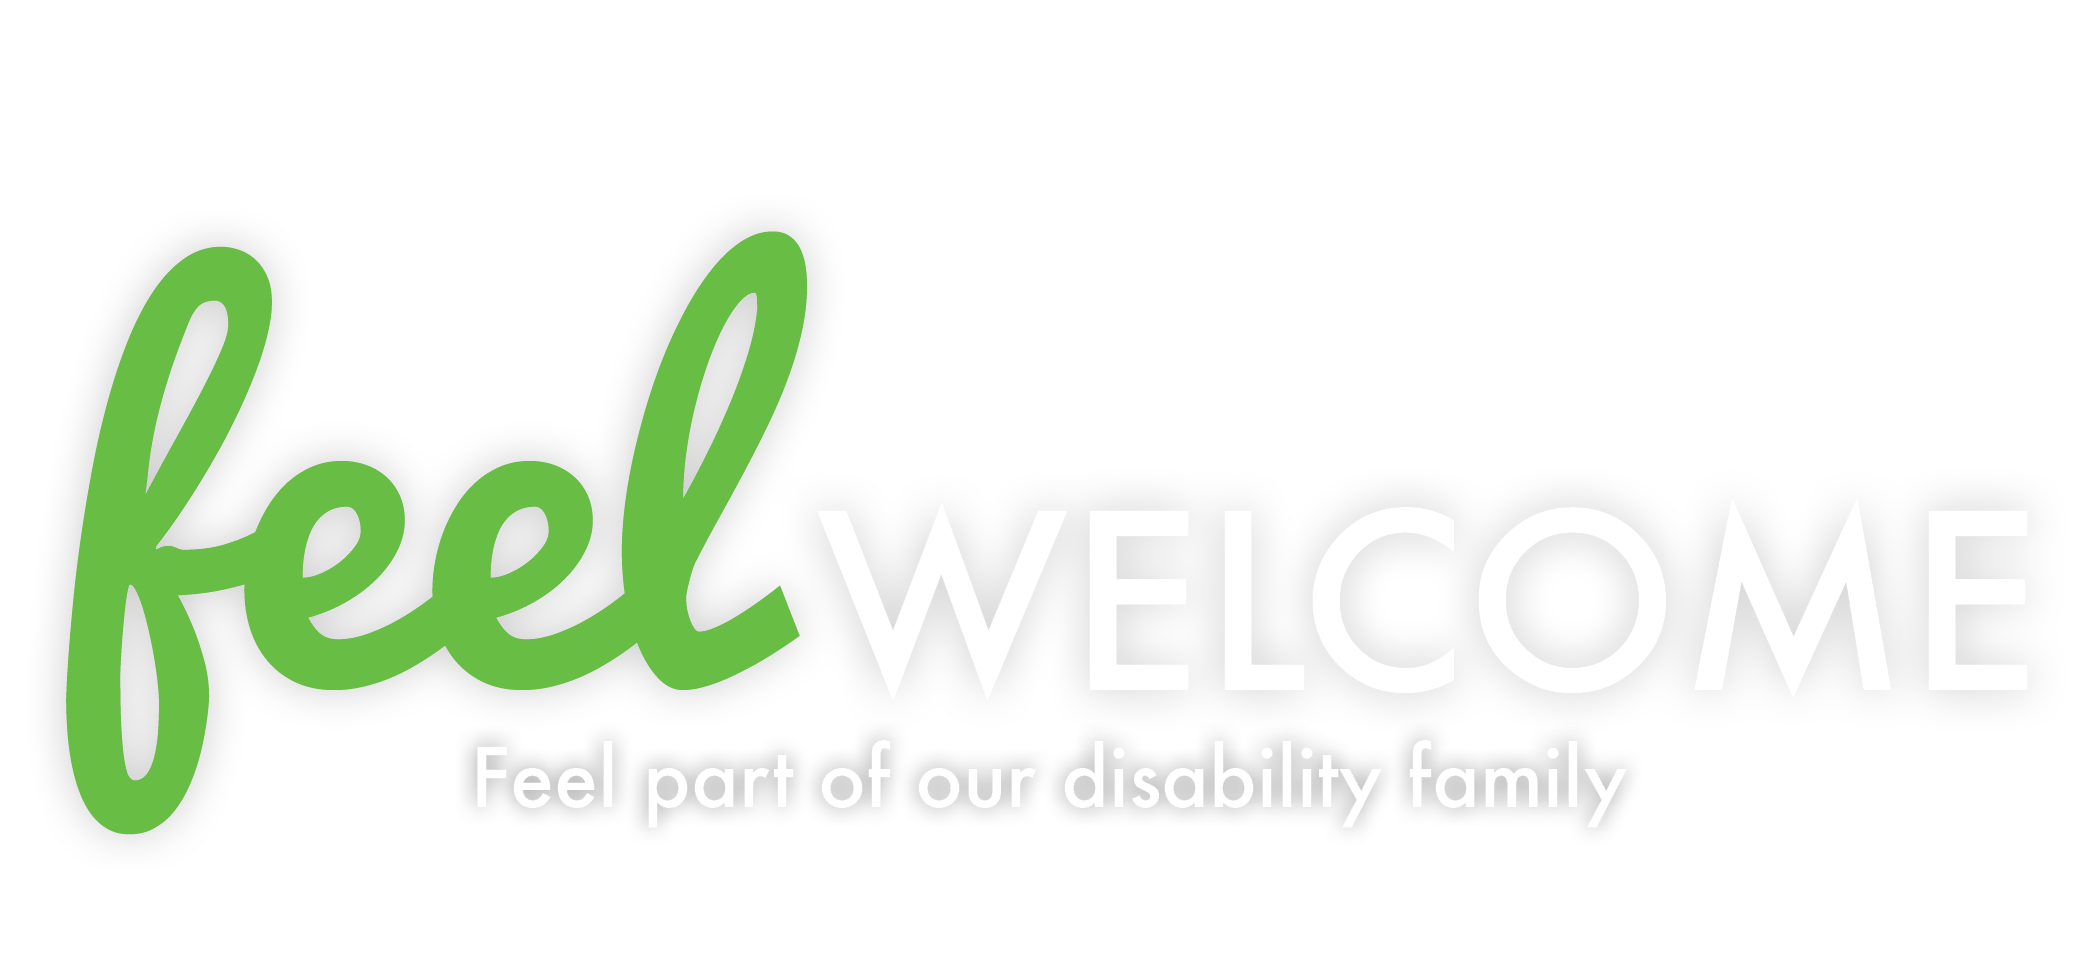 Skillz4Me Family Center for Disabilities